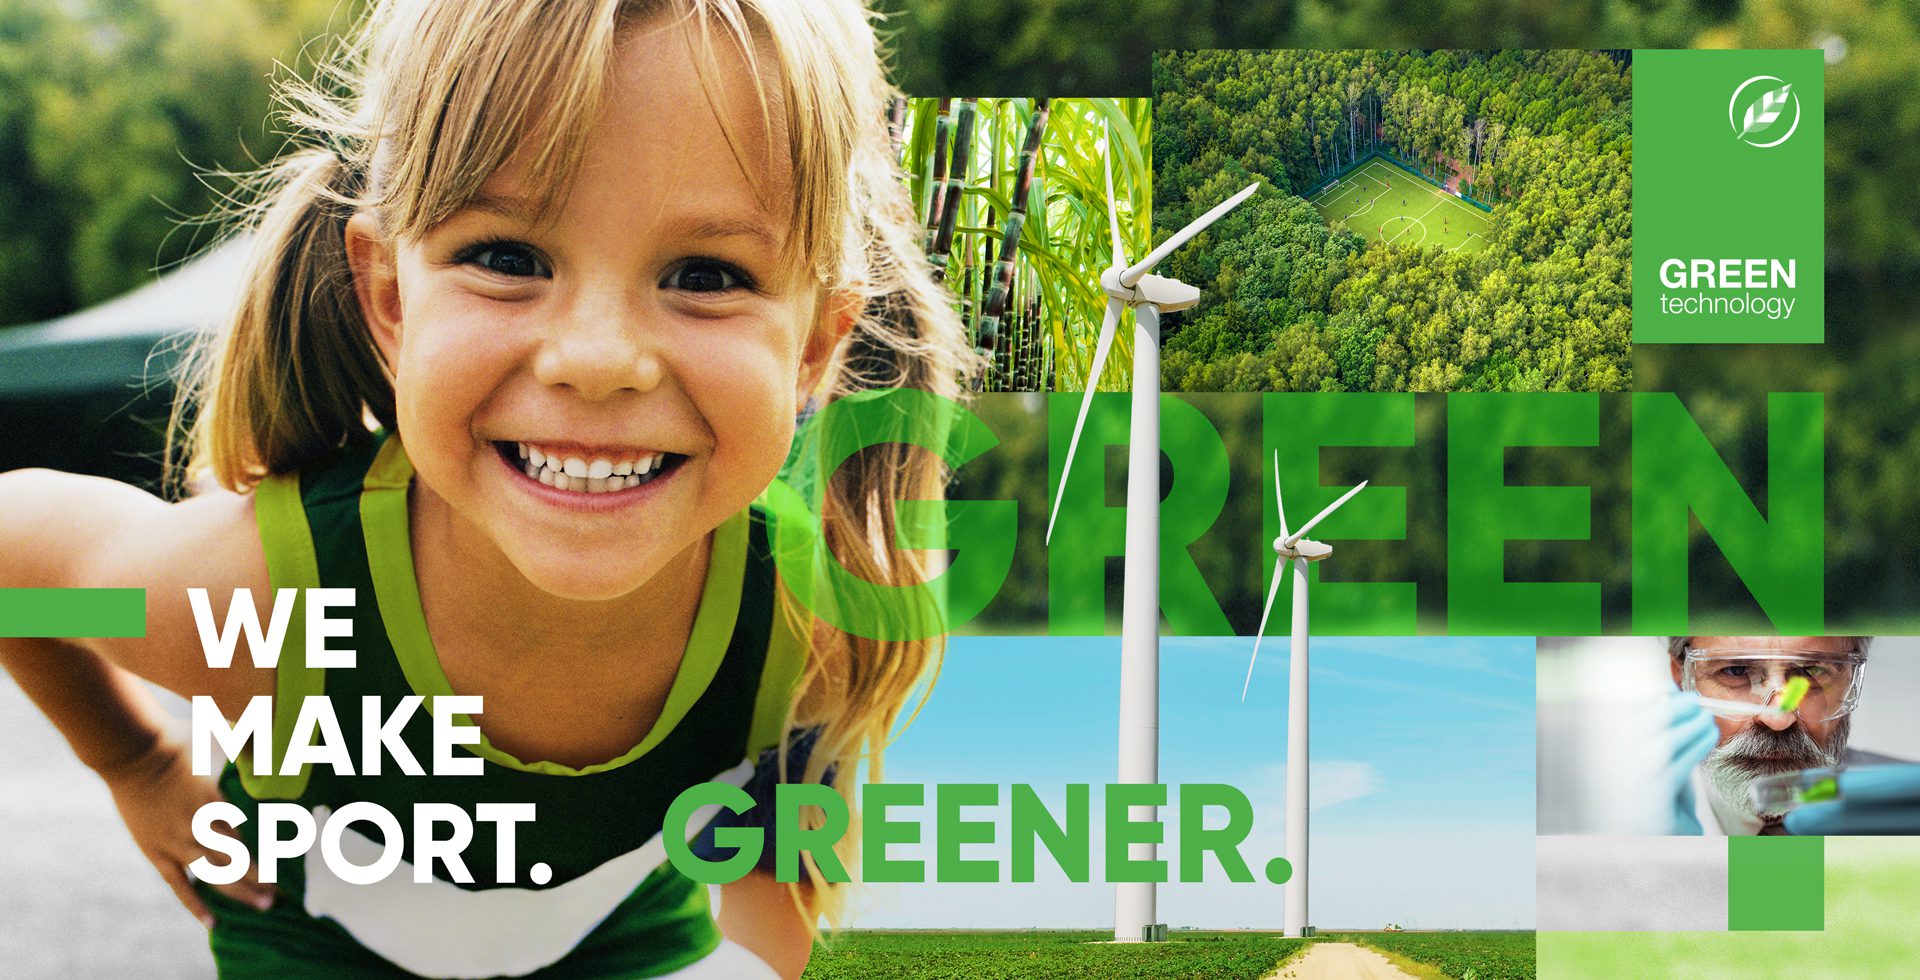 “WE MAKE SPORT. GREENER.” – Sustainability and environmental awareness at Polytan